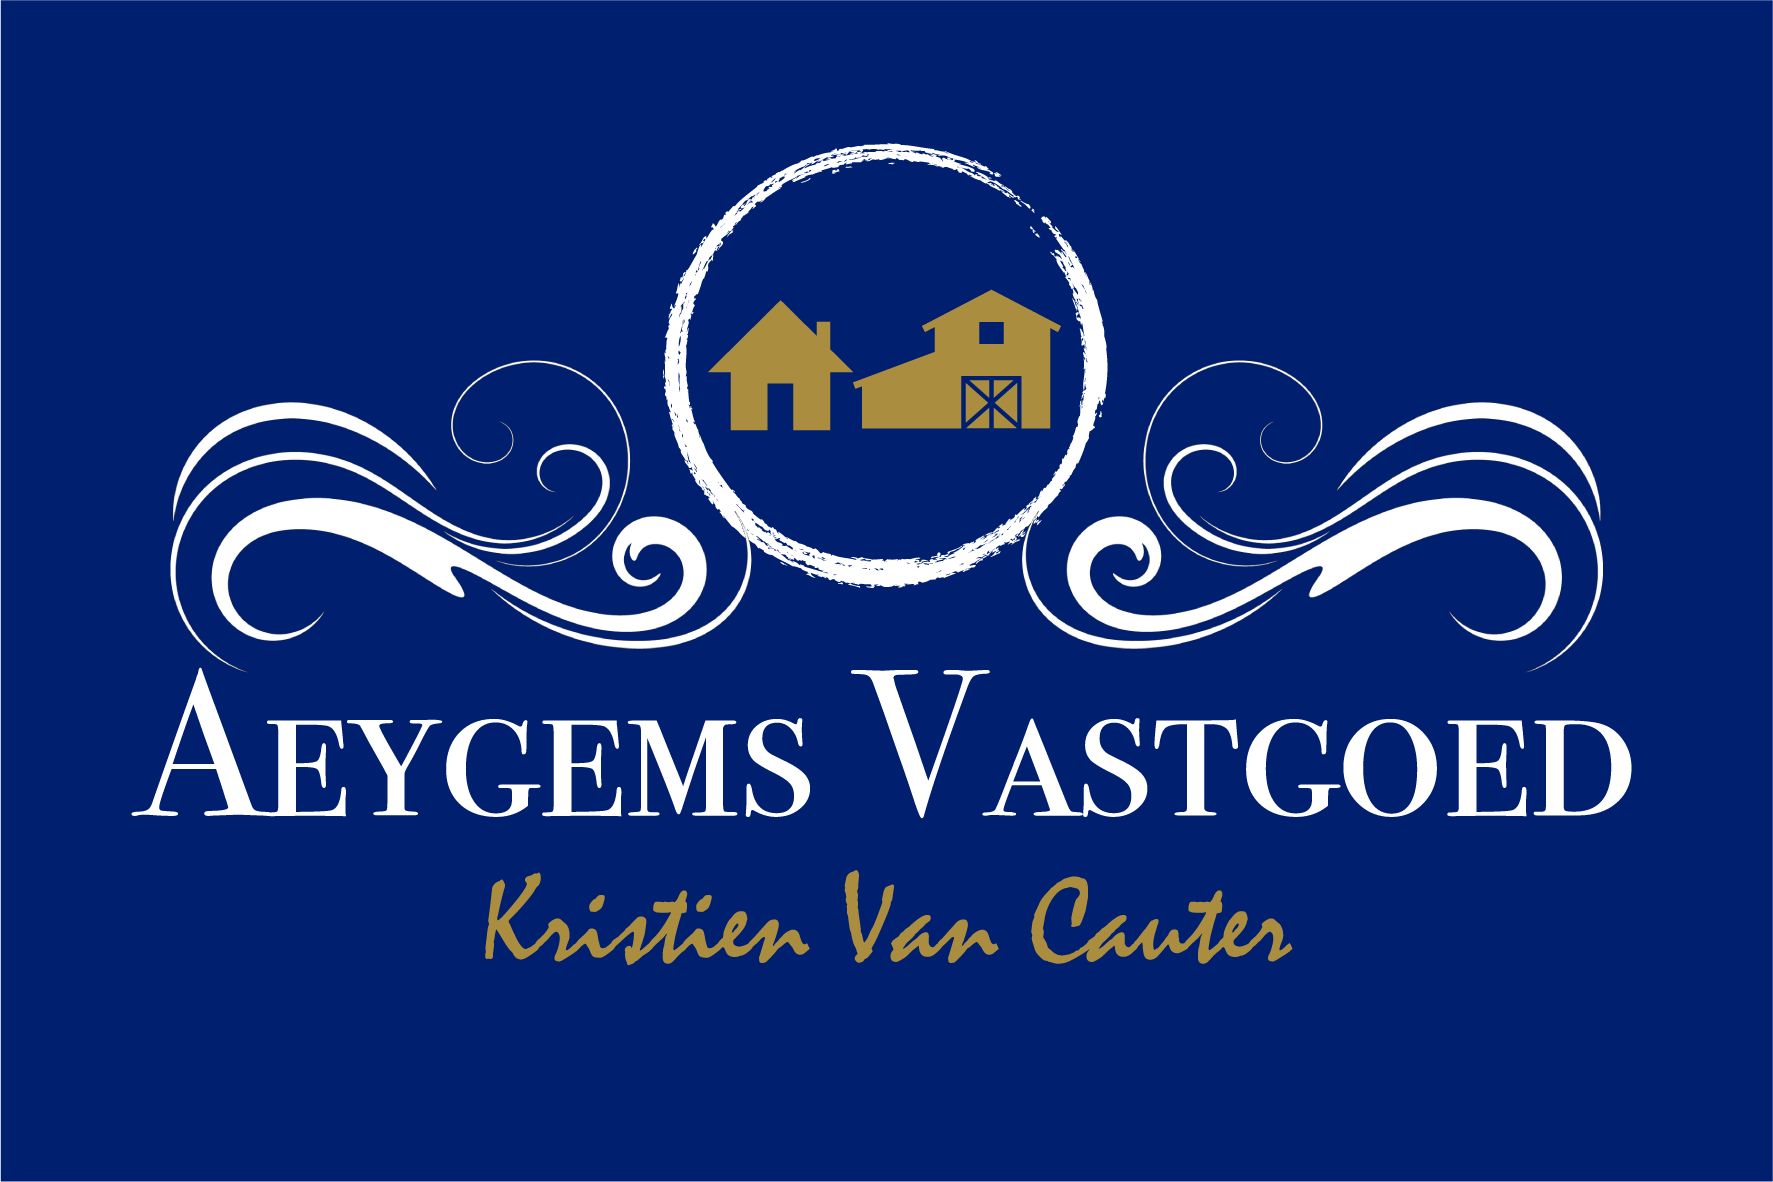 aeygems-vastgoed-logo_office: